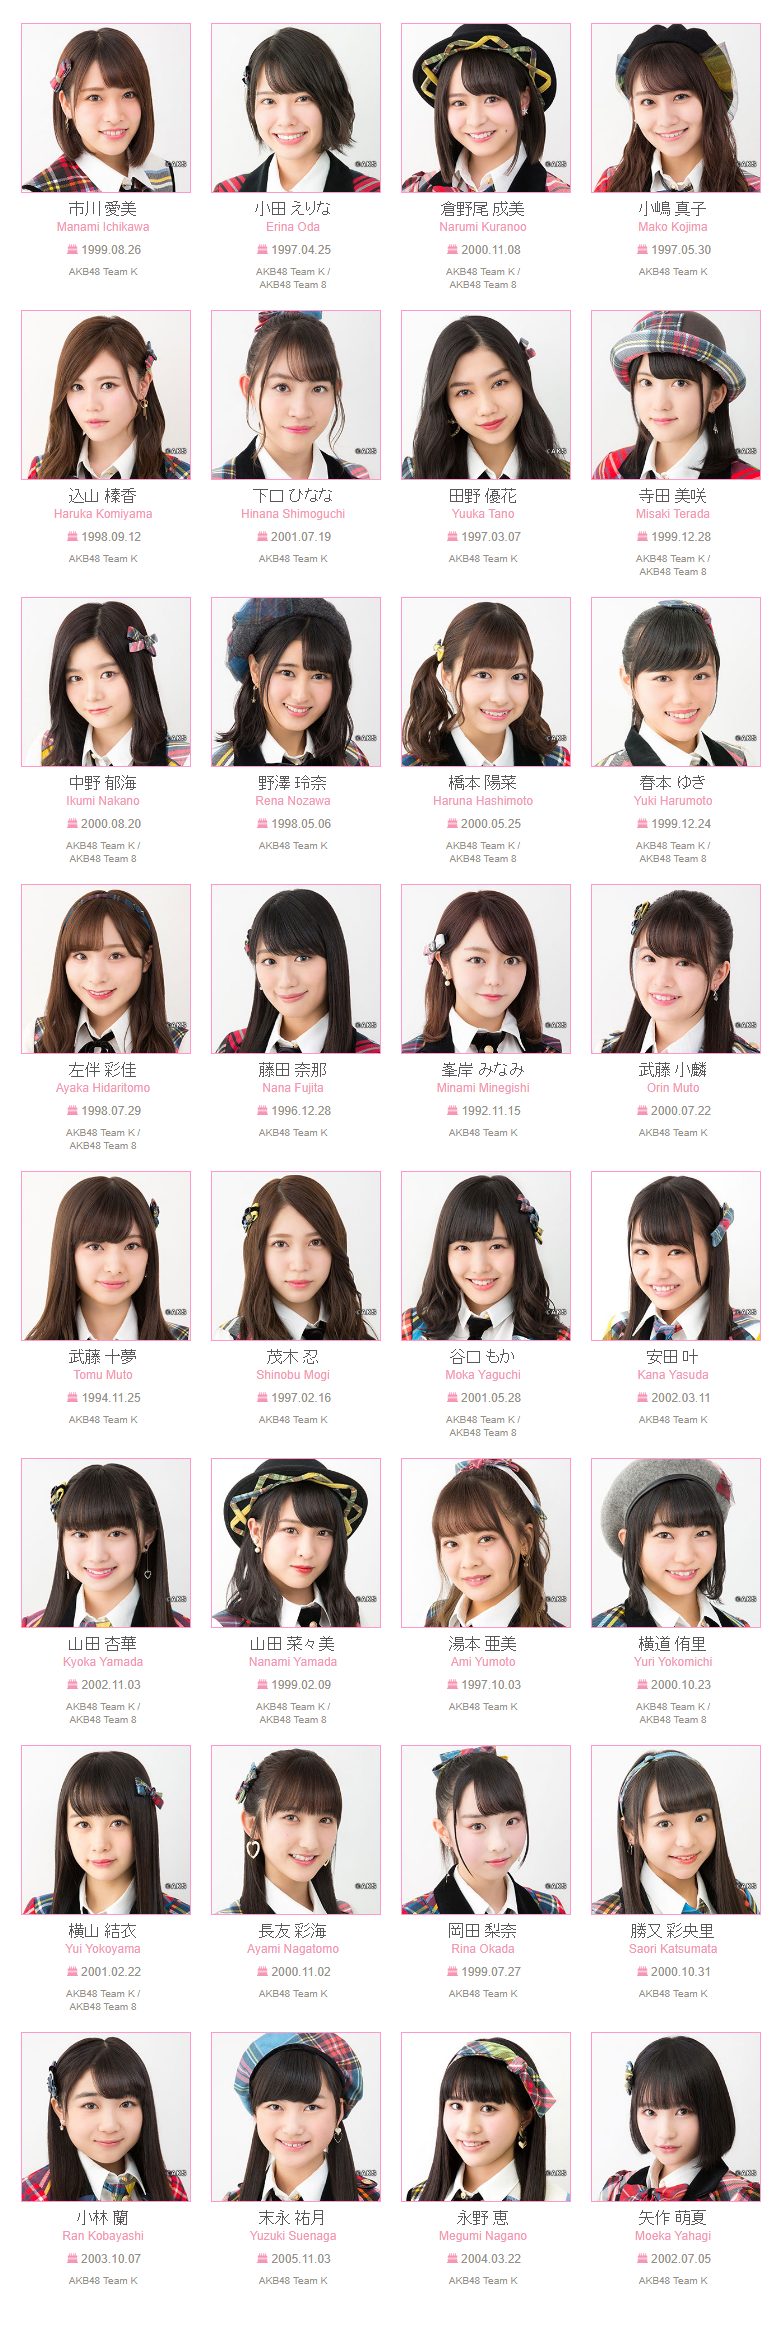 History: Team K | AKB48 Wiki | Fandom